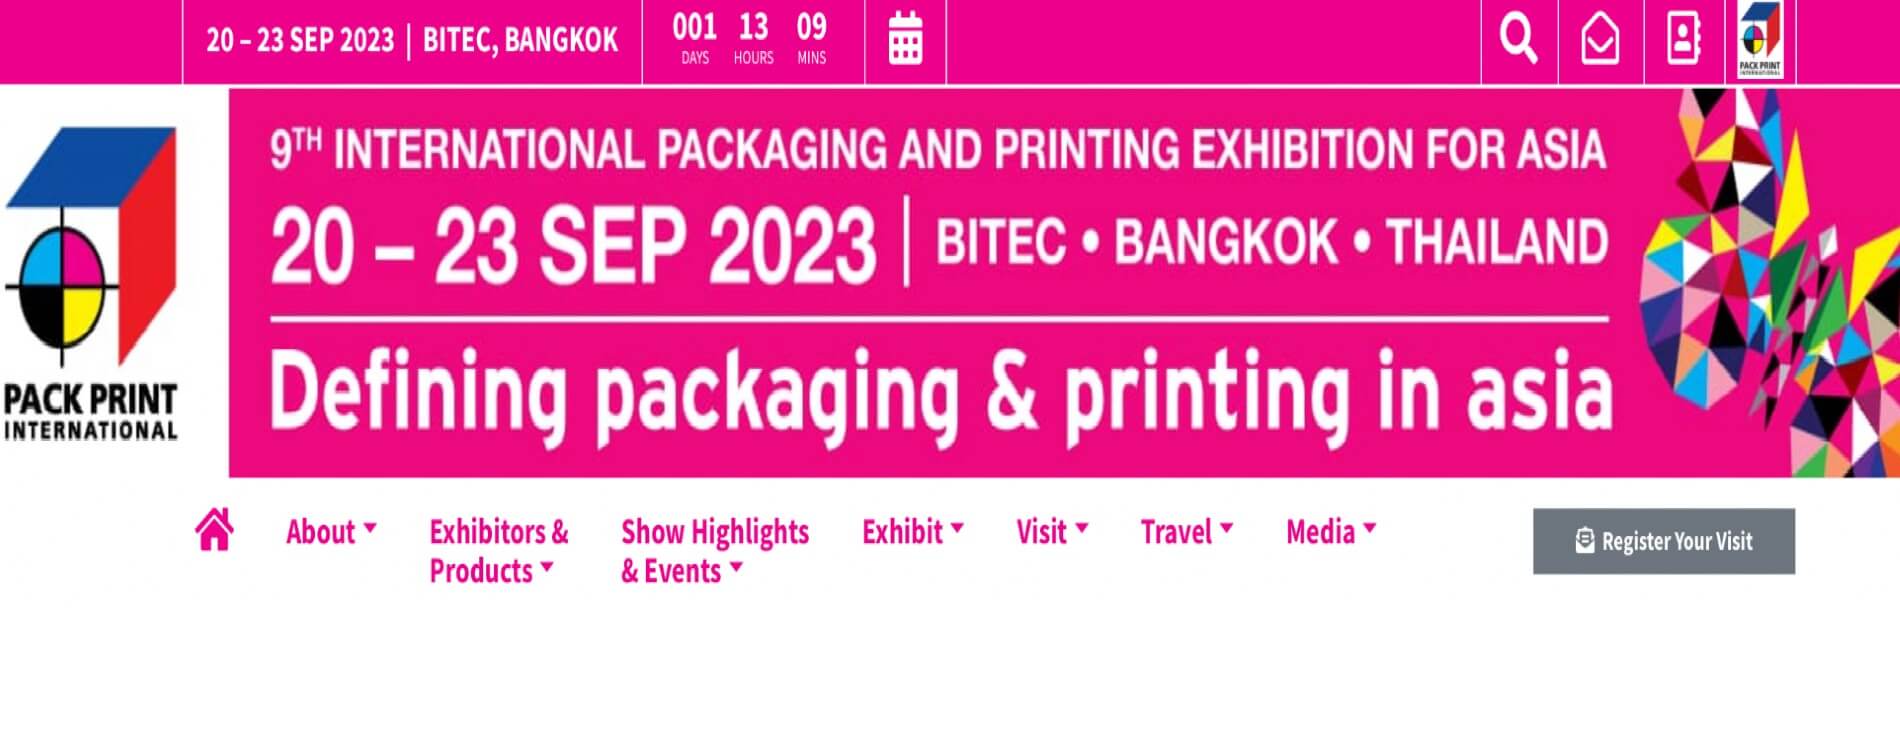 PACK PRINT INTERNATIONAL 2023: Asia's Premier Packaging & Printing Exhibition